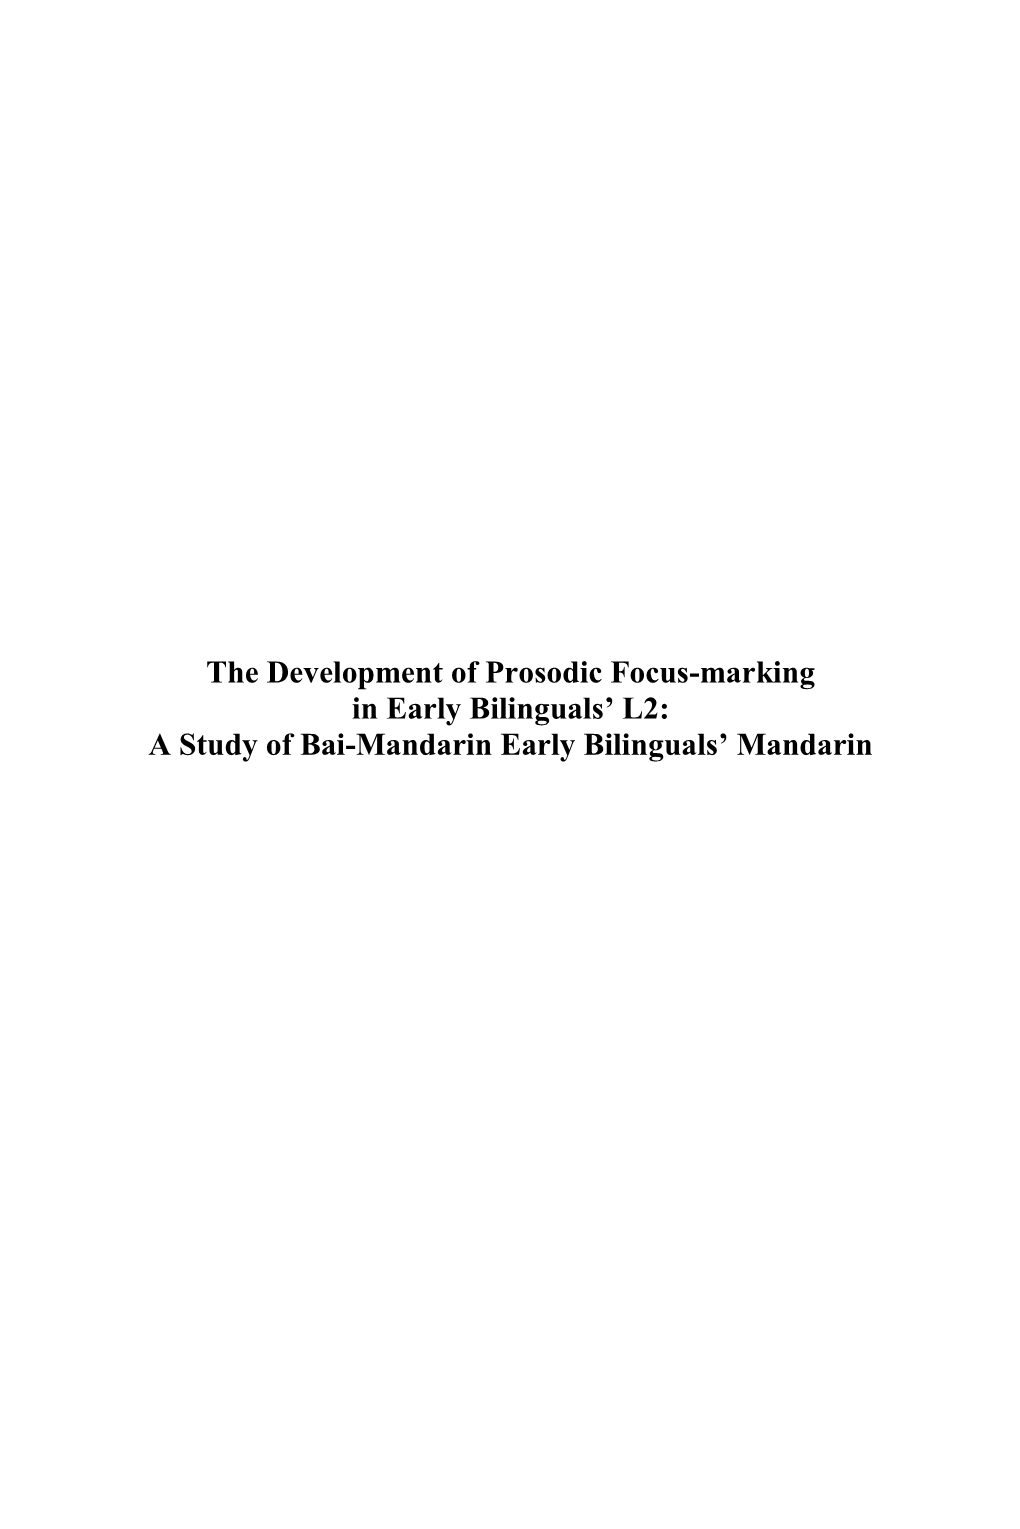 Development of Prosodic Focus-Marking in Early Bilinguals’ L2: a Study of Bai-Mandarin Early Bilinguals’ Mandarin